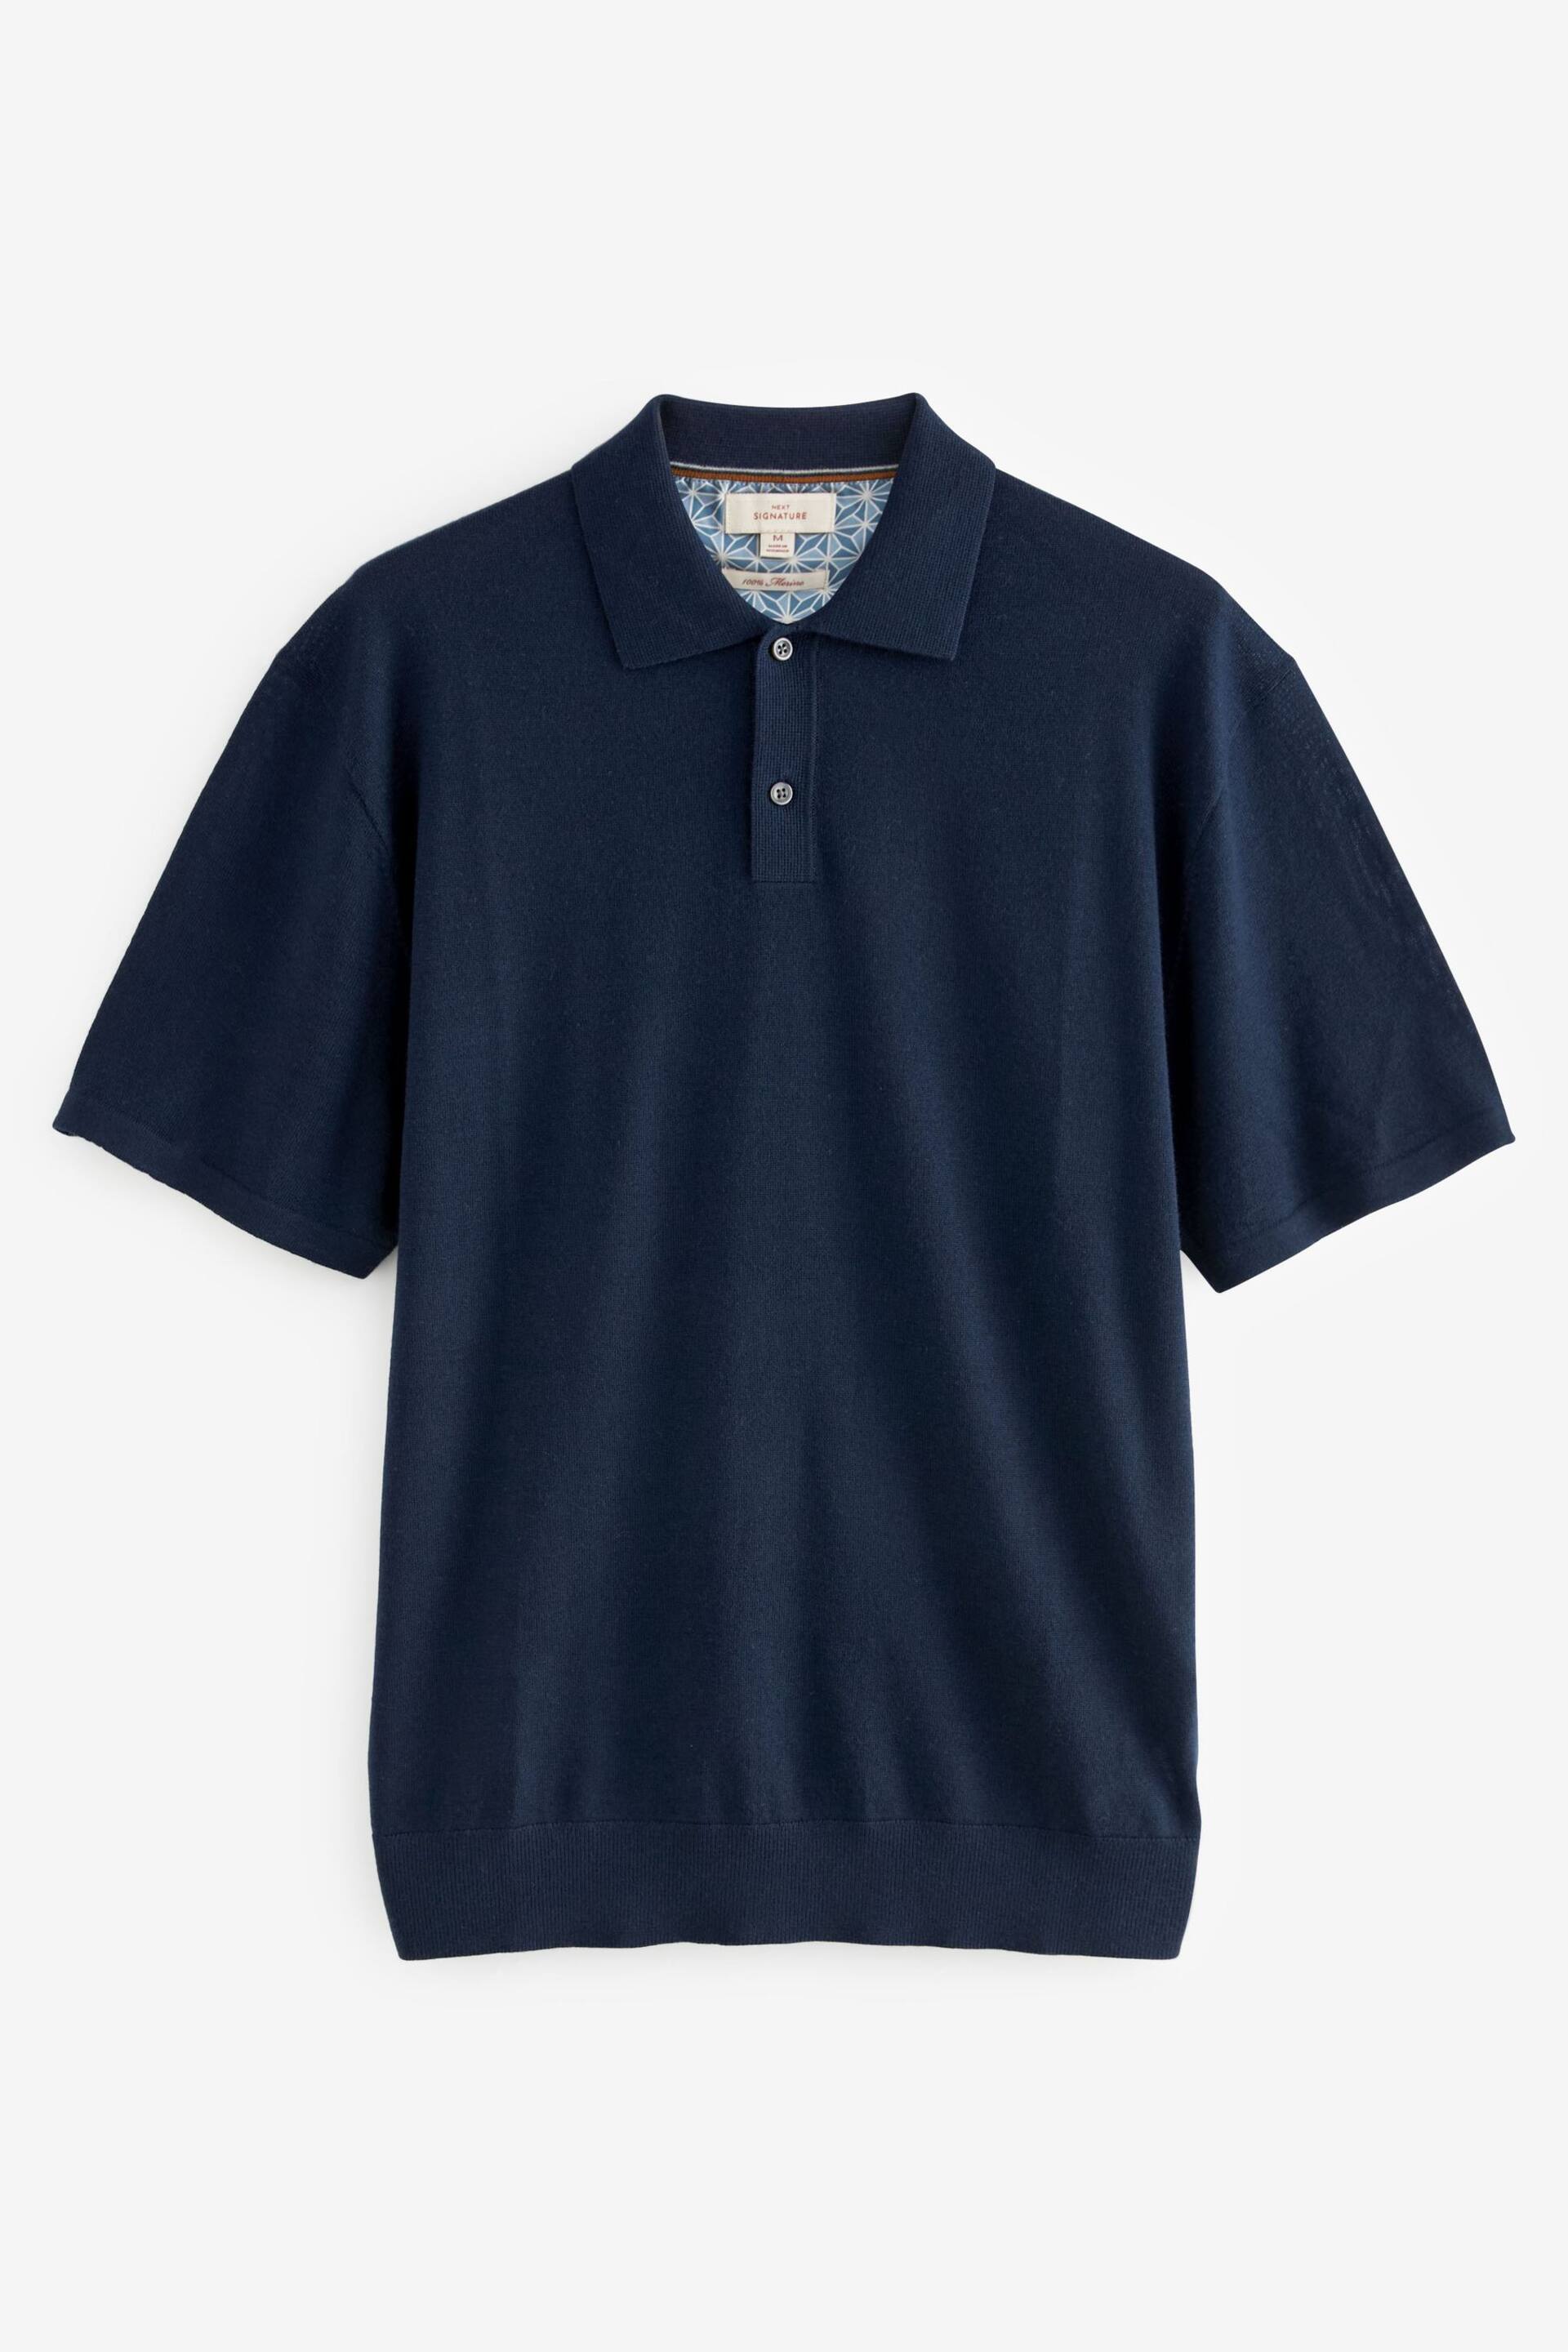 Navy Blue Knitted Premium Merino Wool Regular Fit Polo Shirt - Image 5 of 7